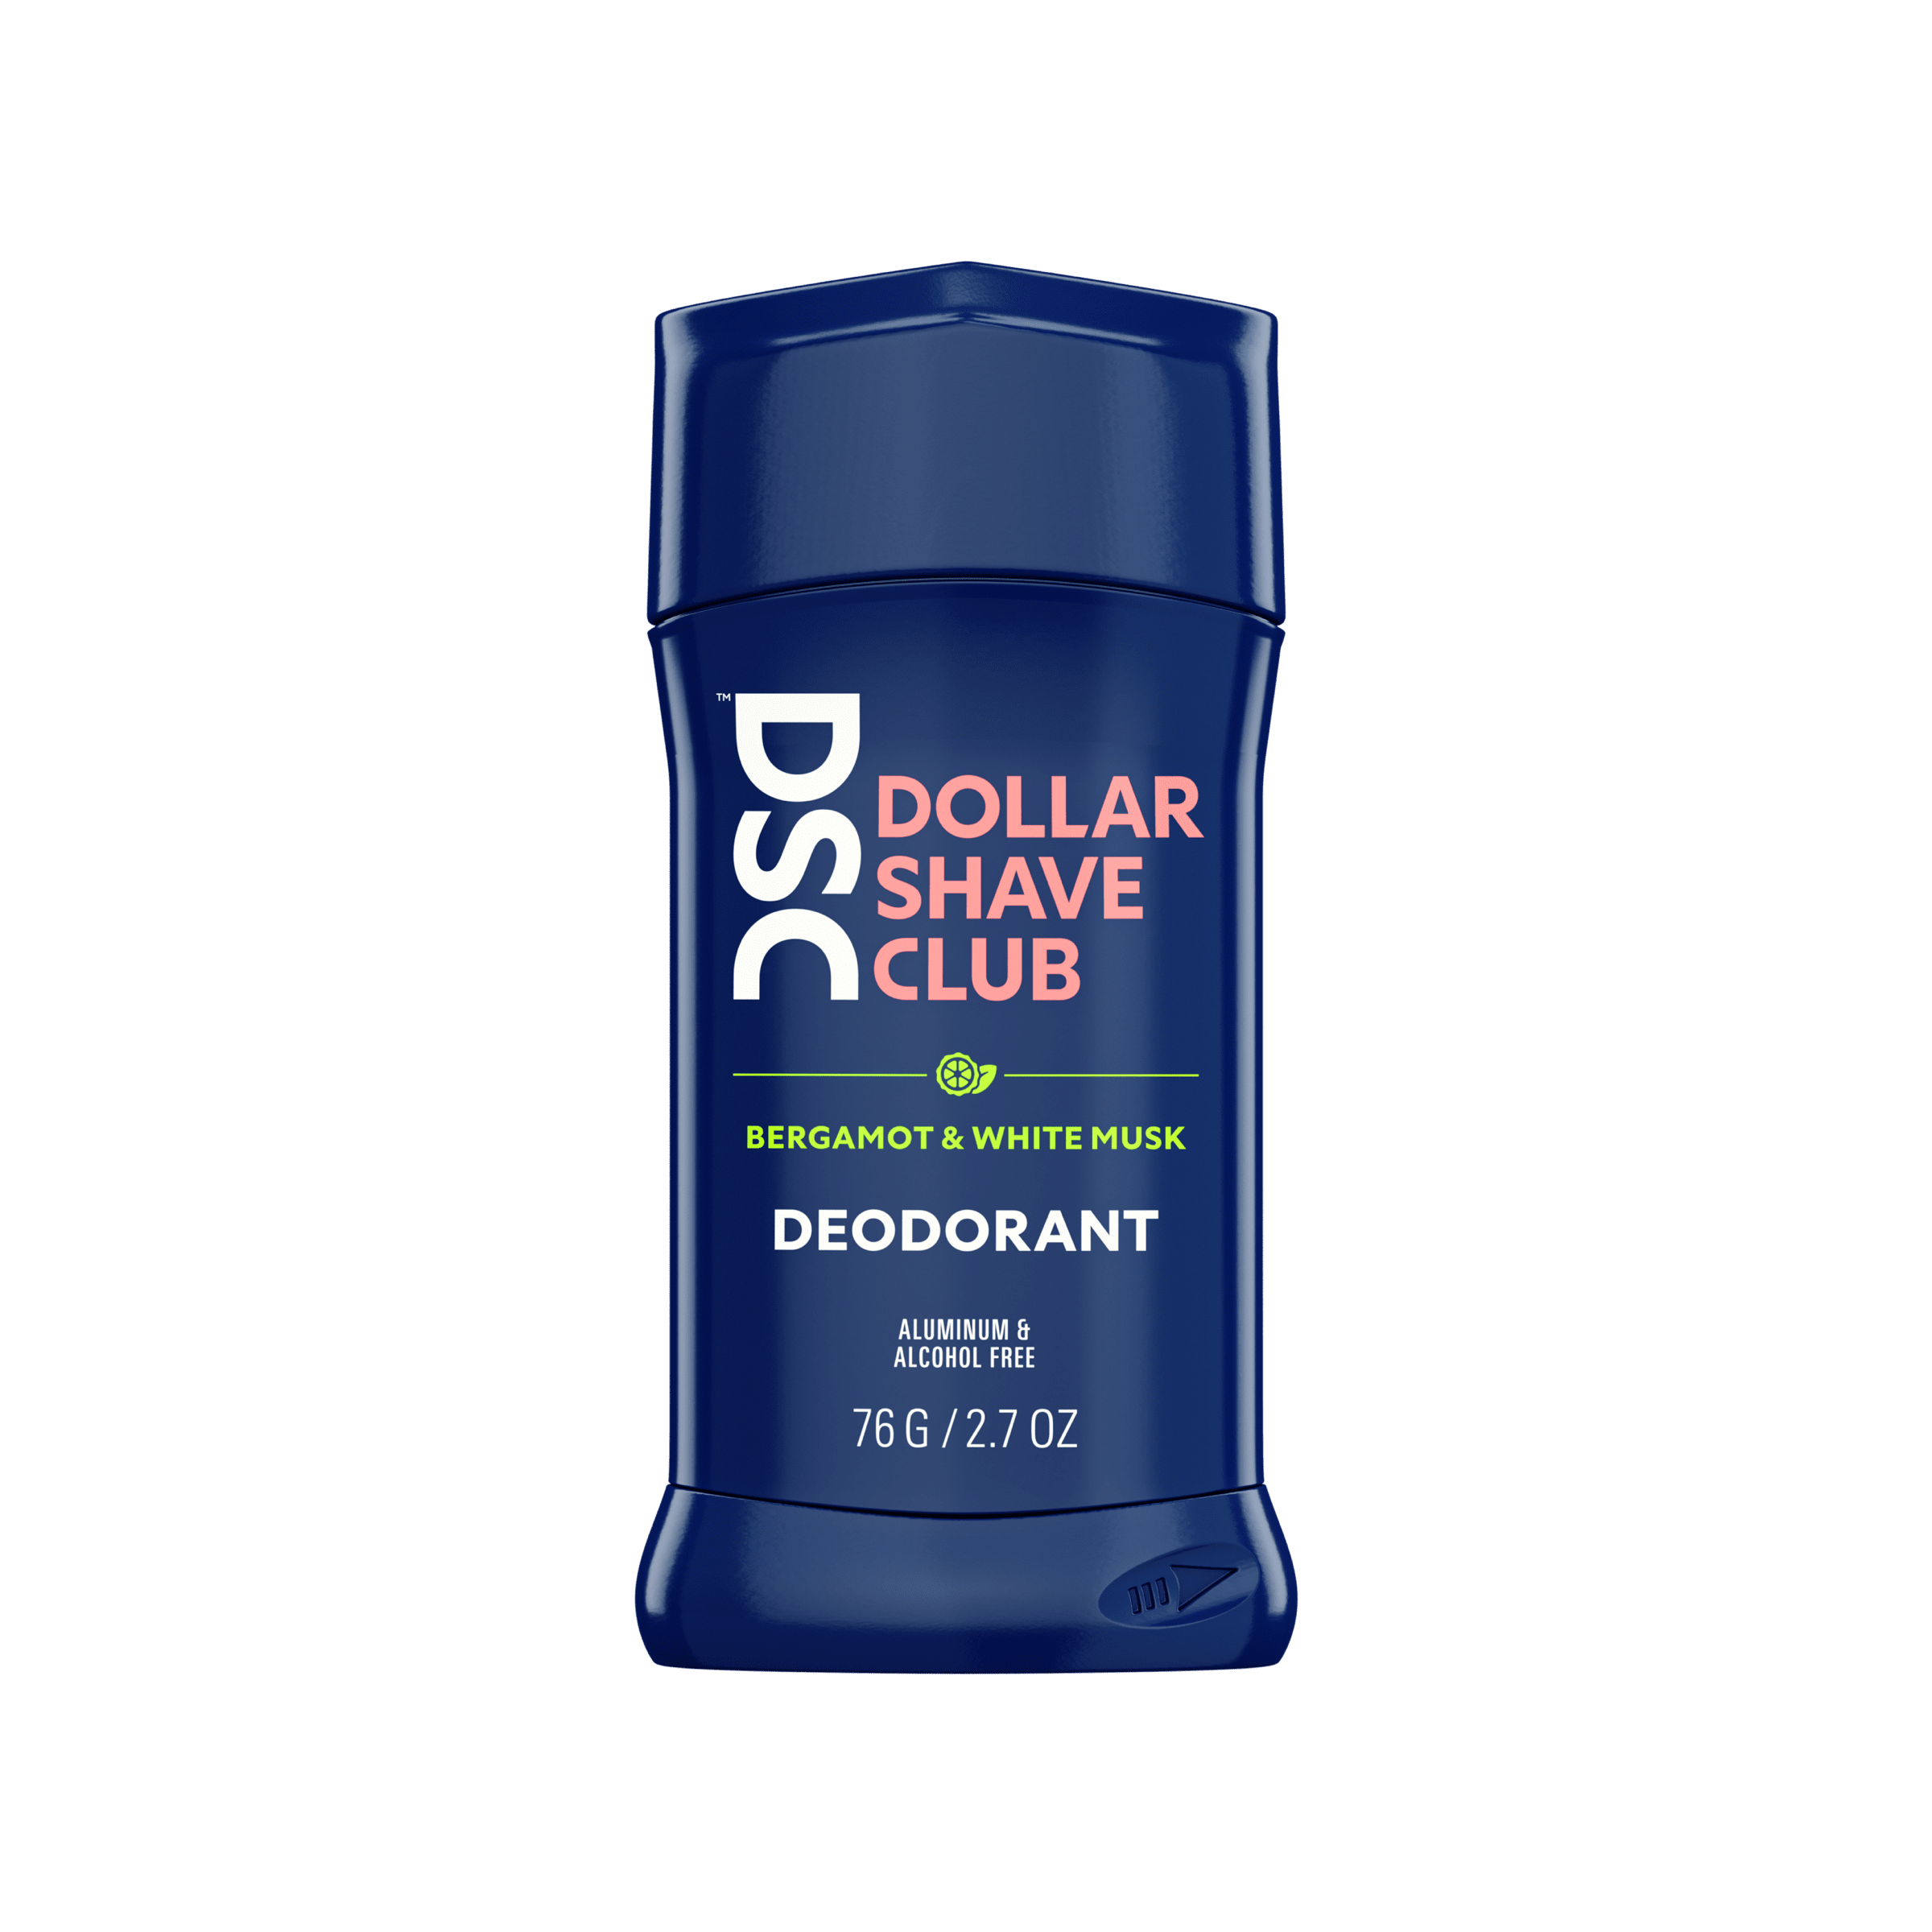 Dollar Shave Club Deodorant Bergamot White Musk against blank backdrop.